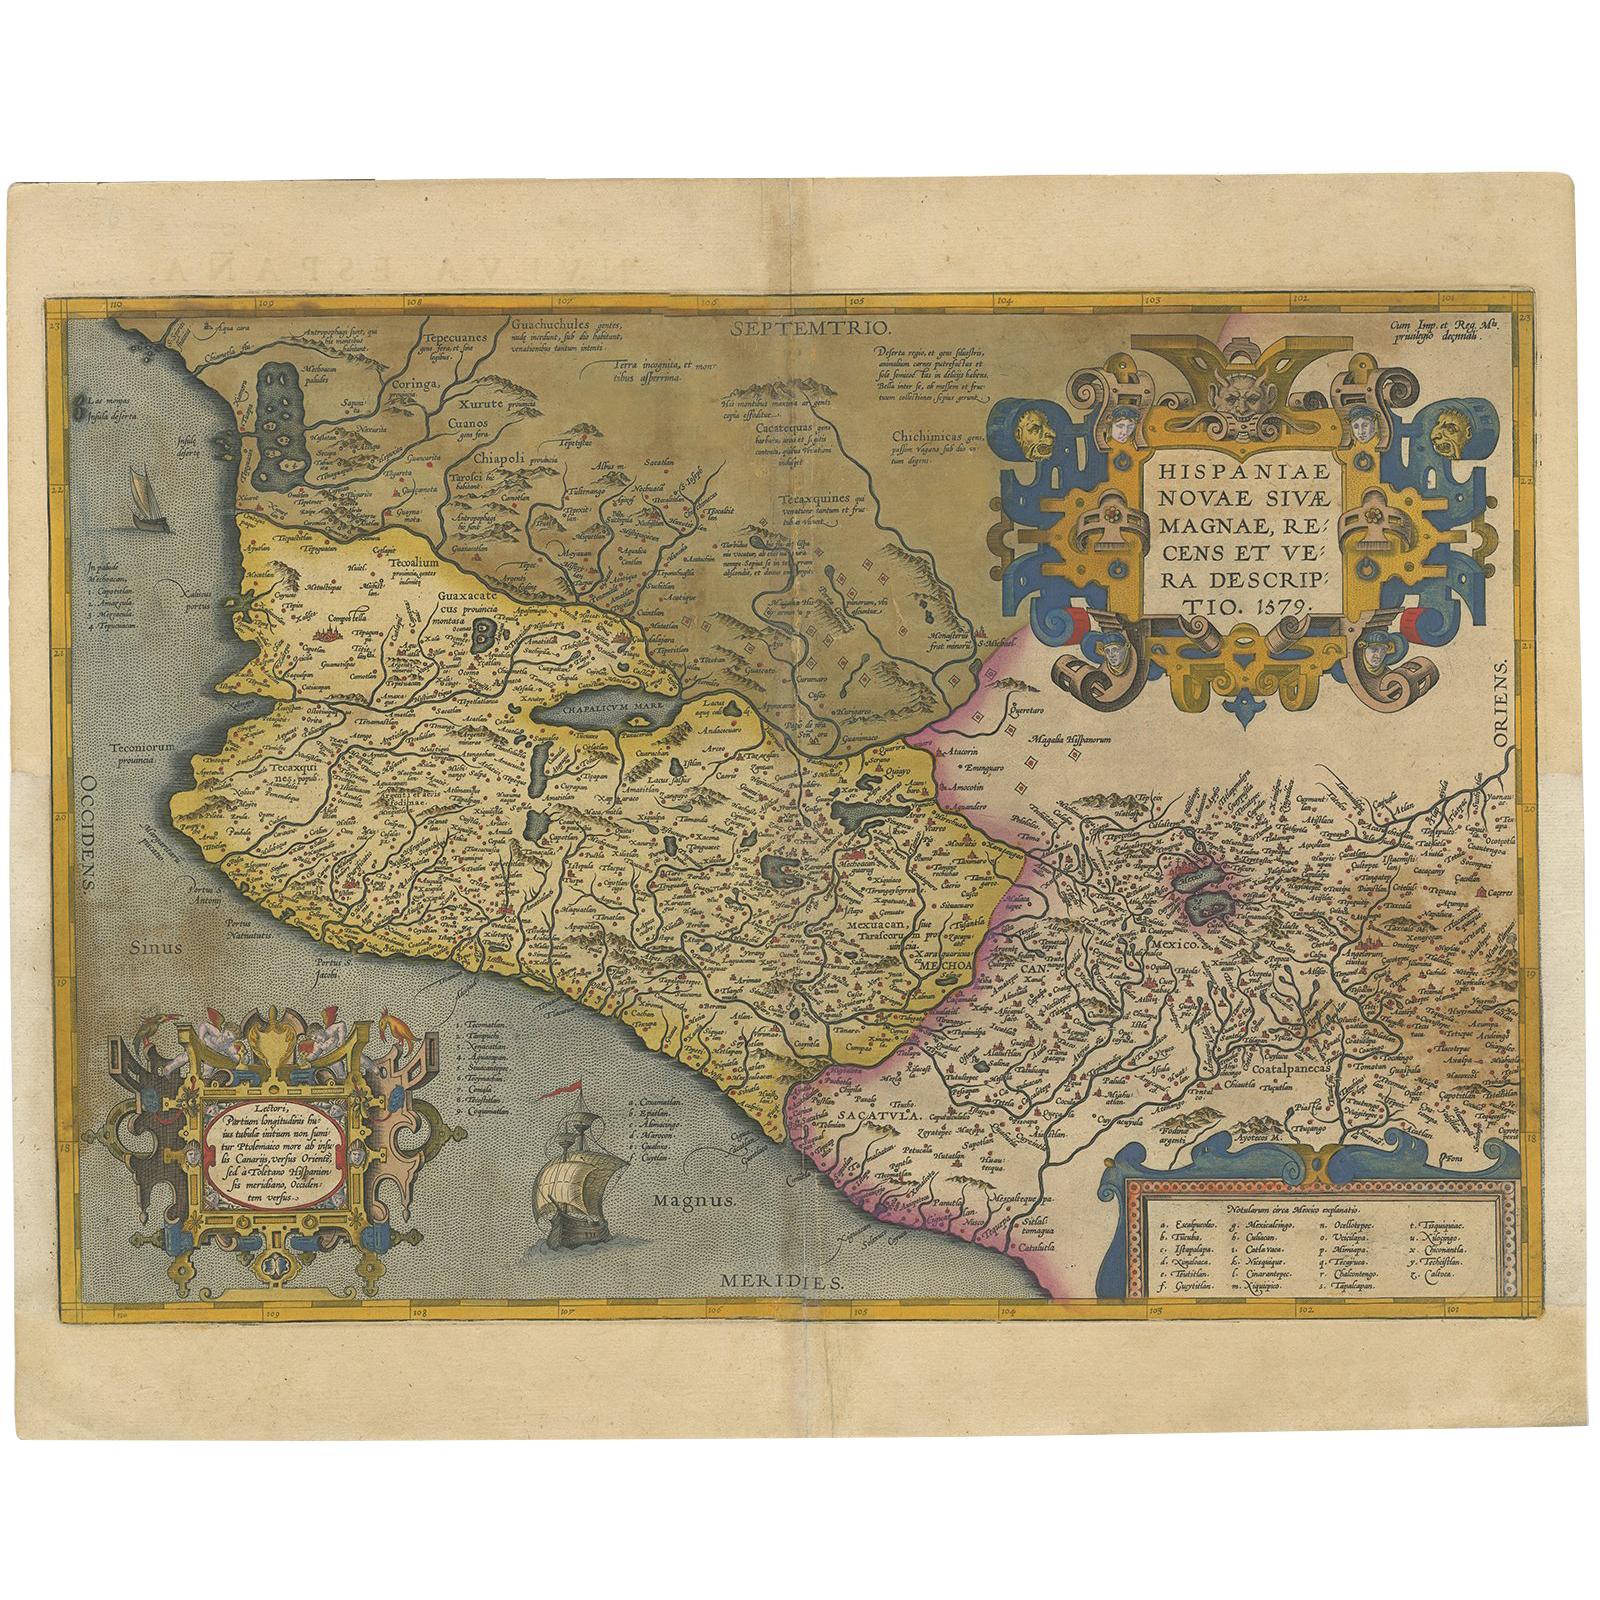 Antique Map of Mexico by Ortelius, circa 1602